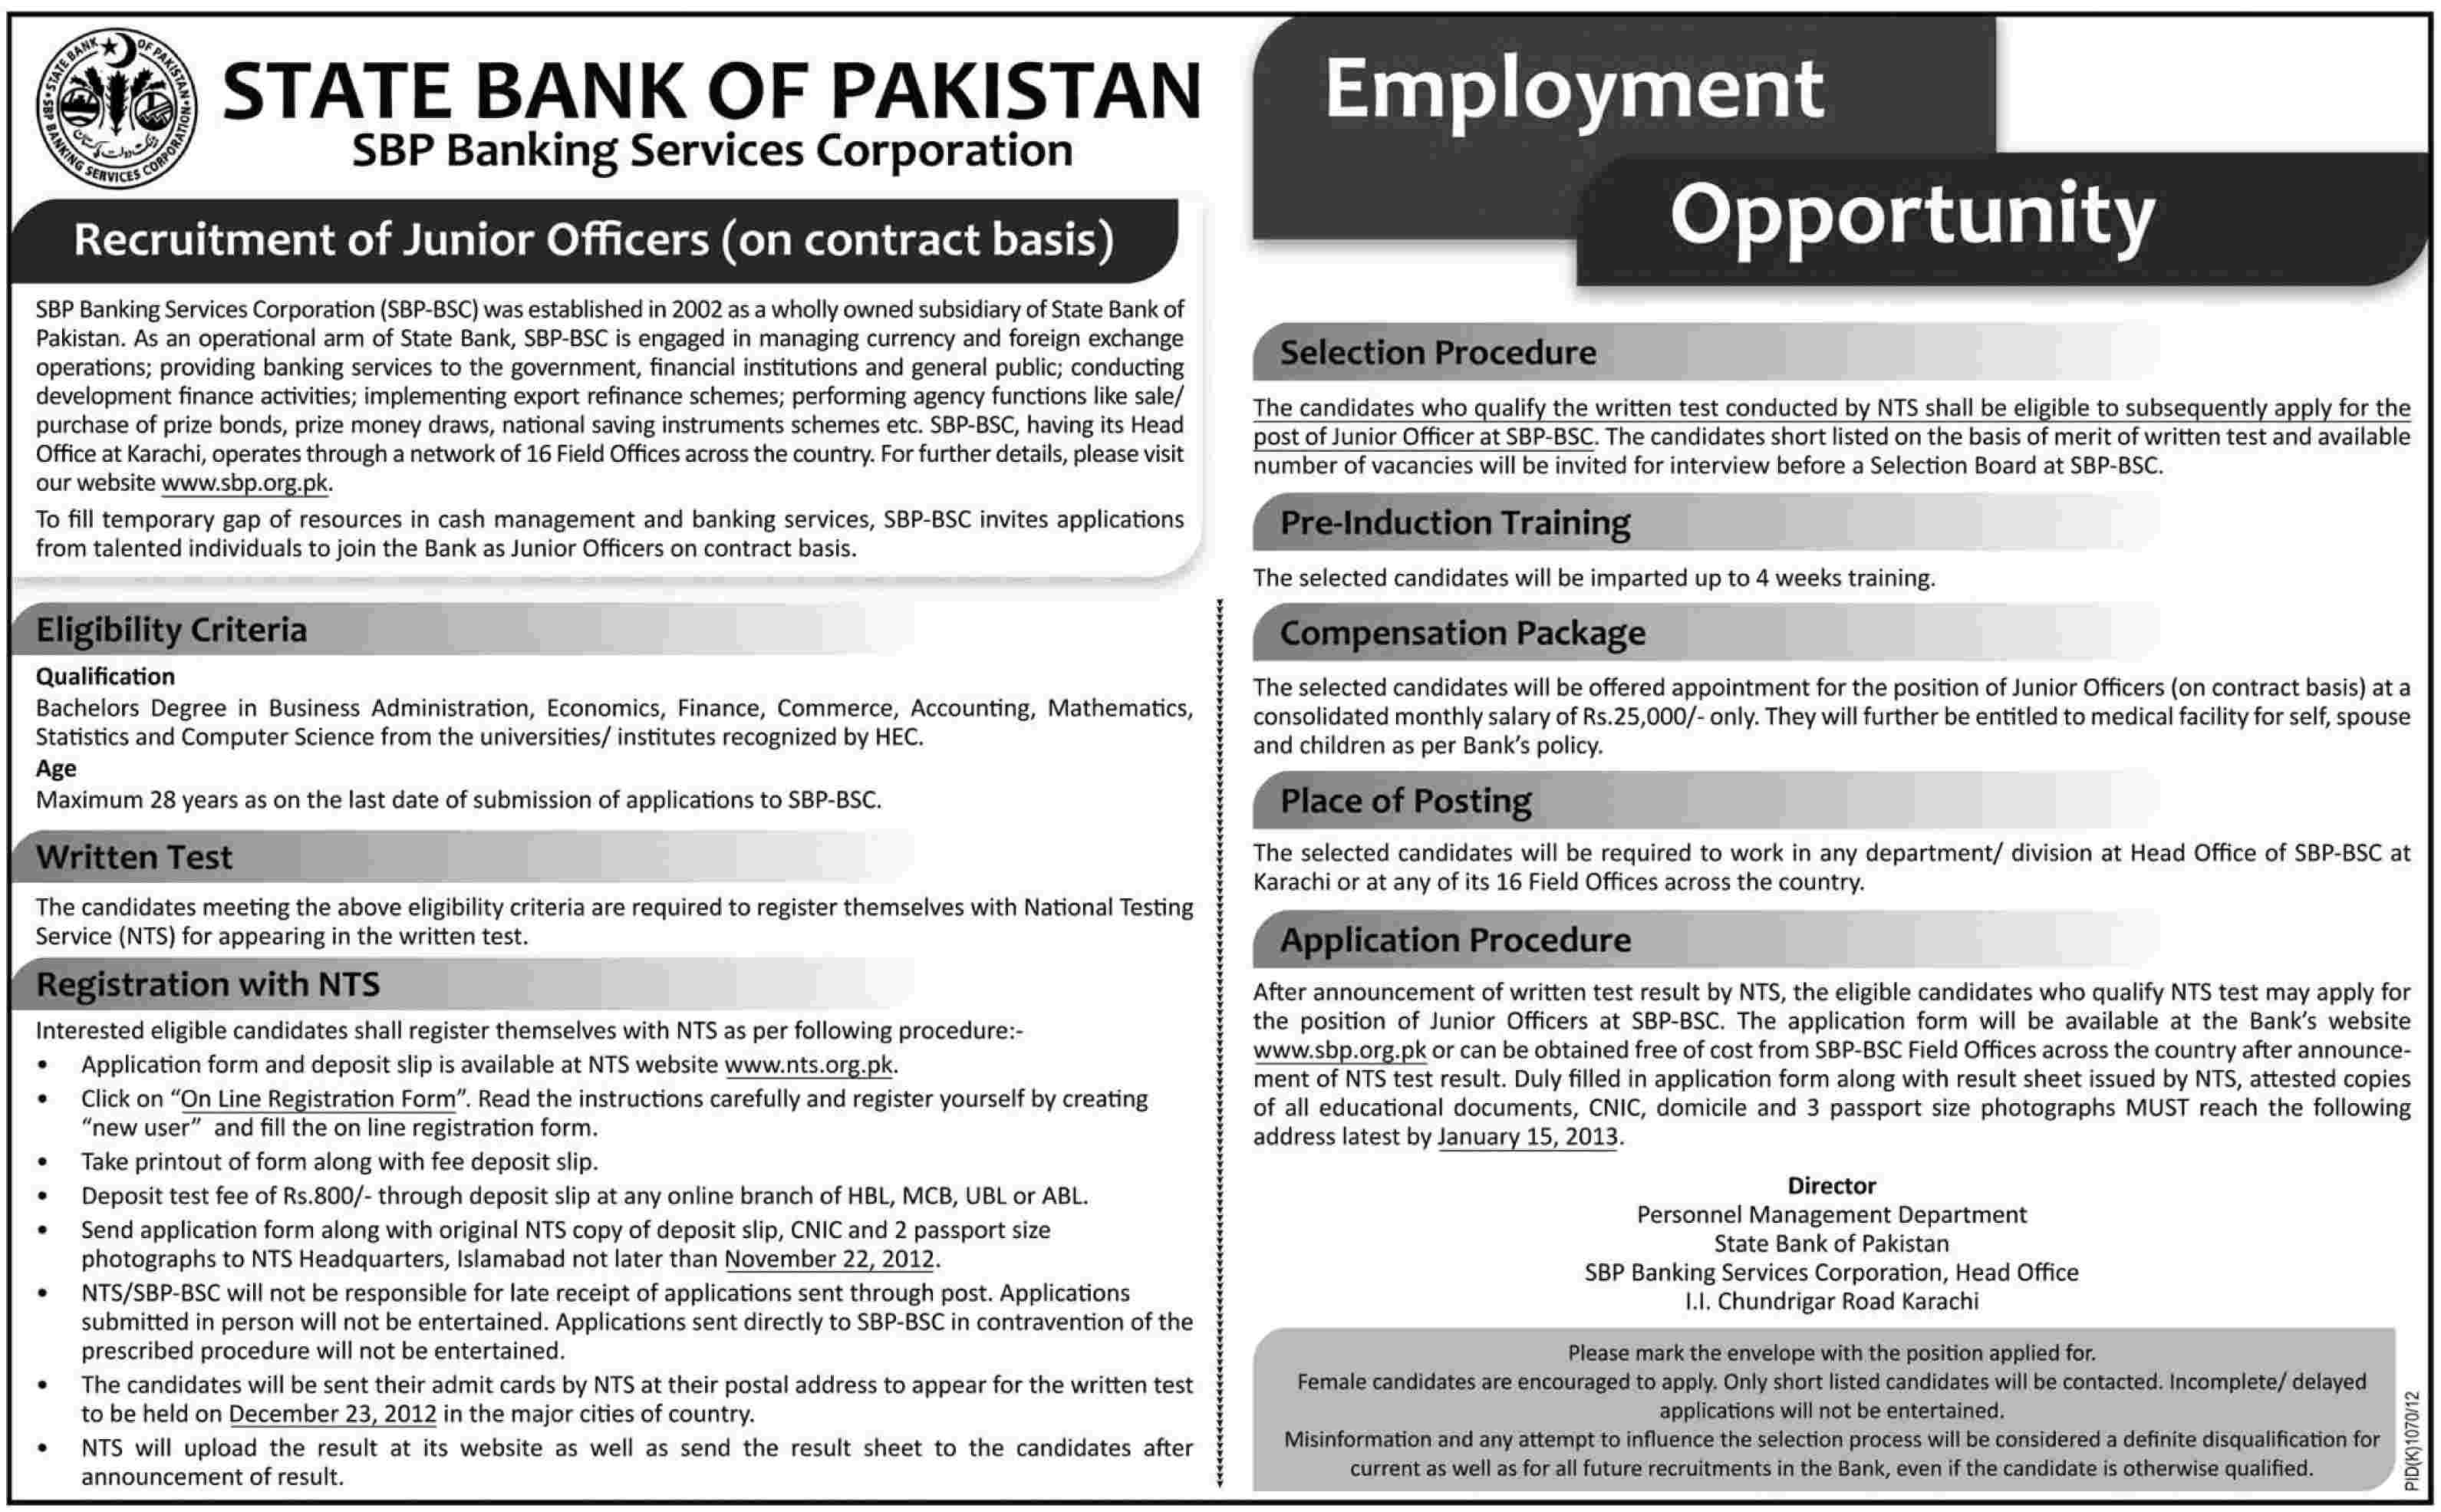 State Bank of Pakistan (SBP) Jobs